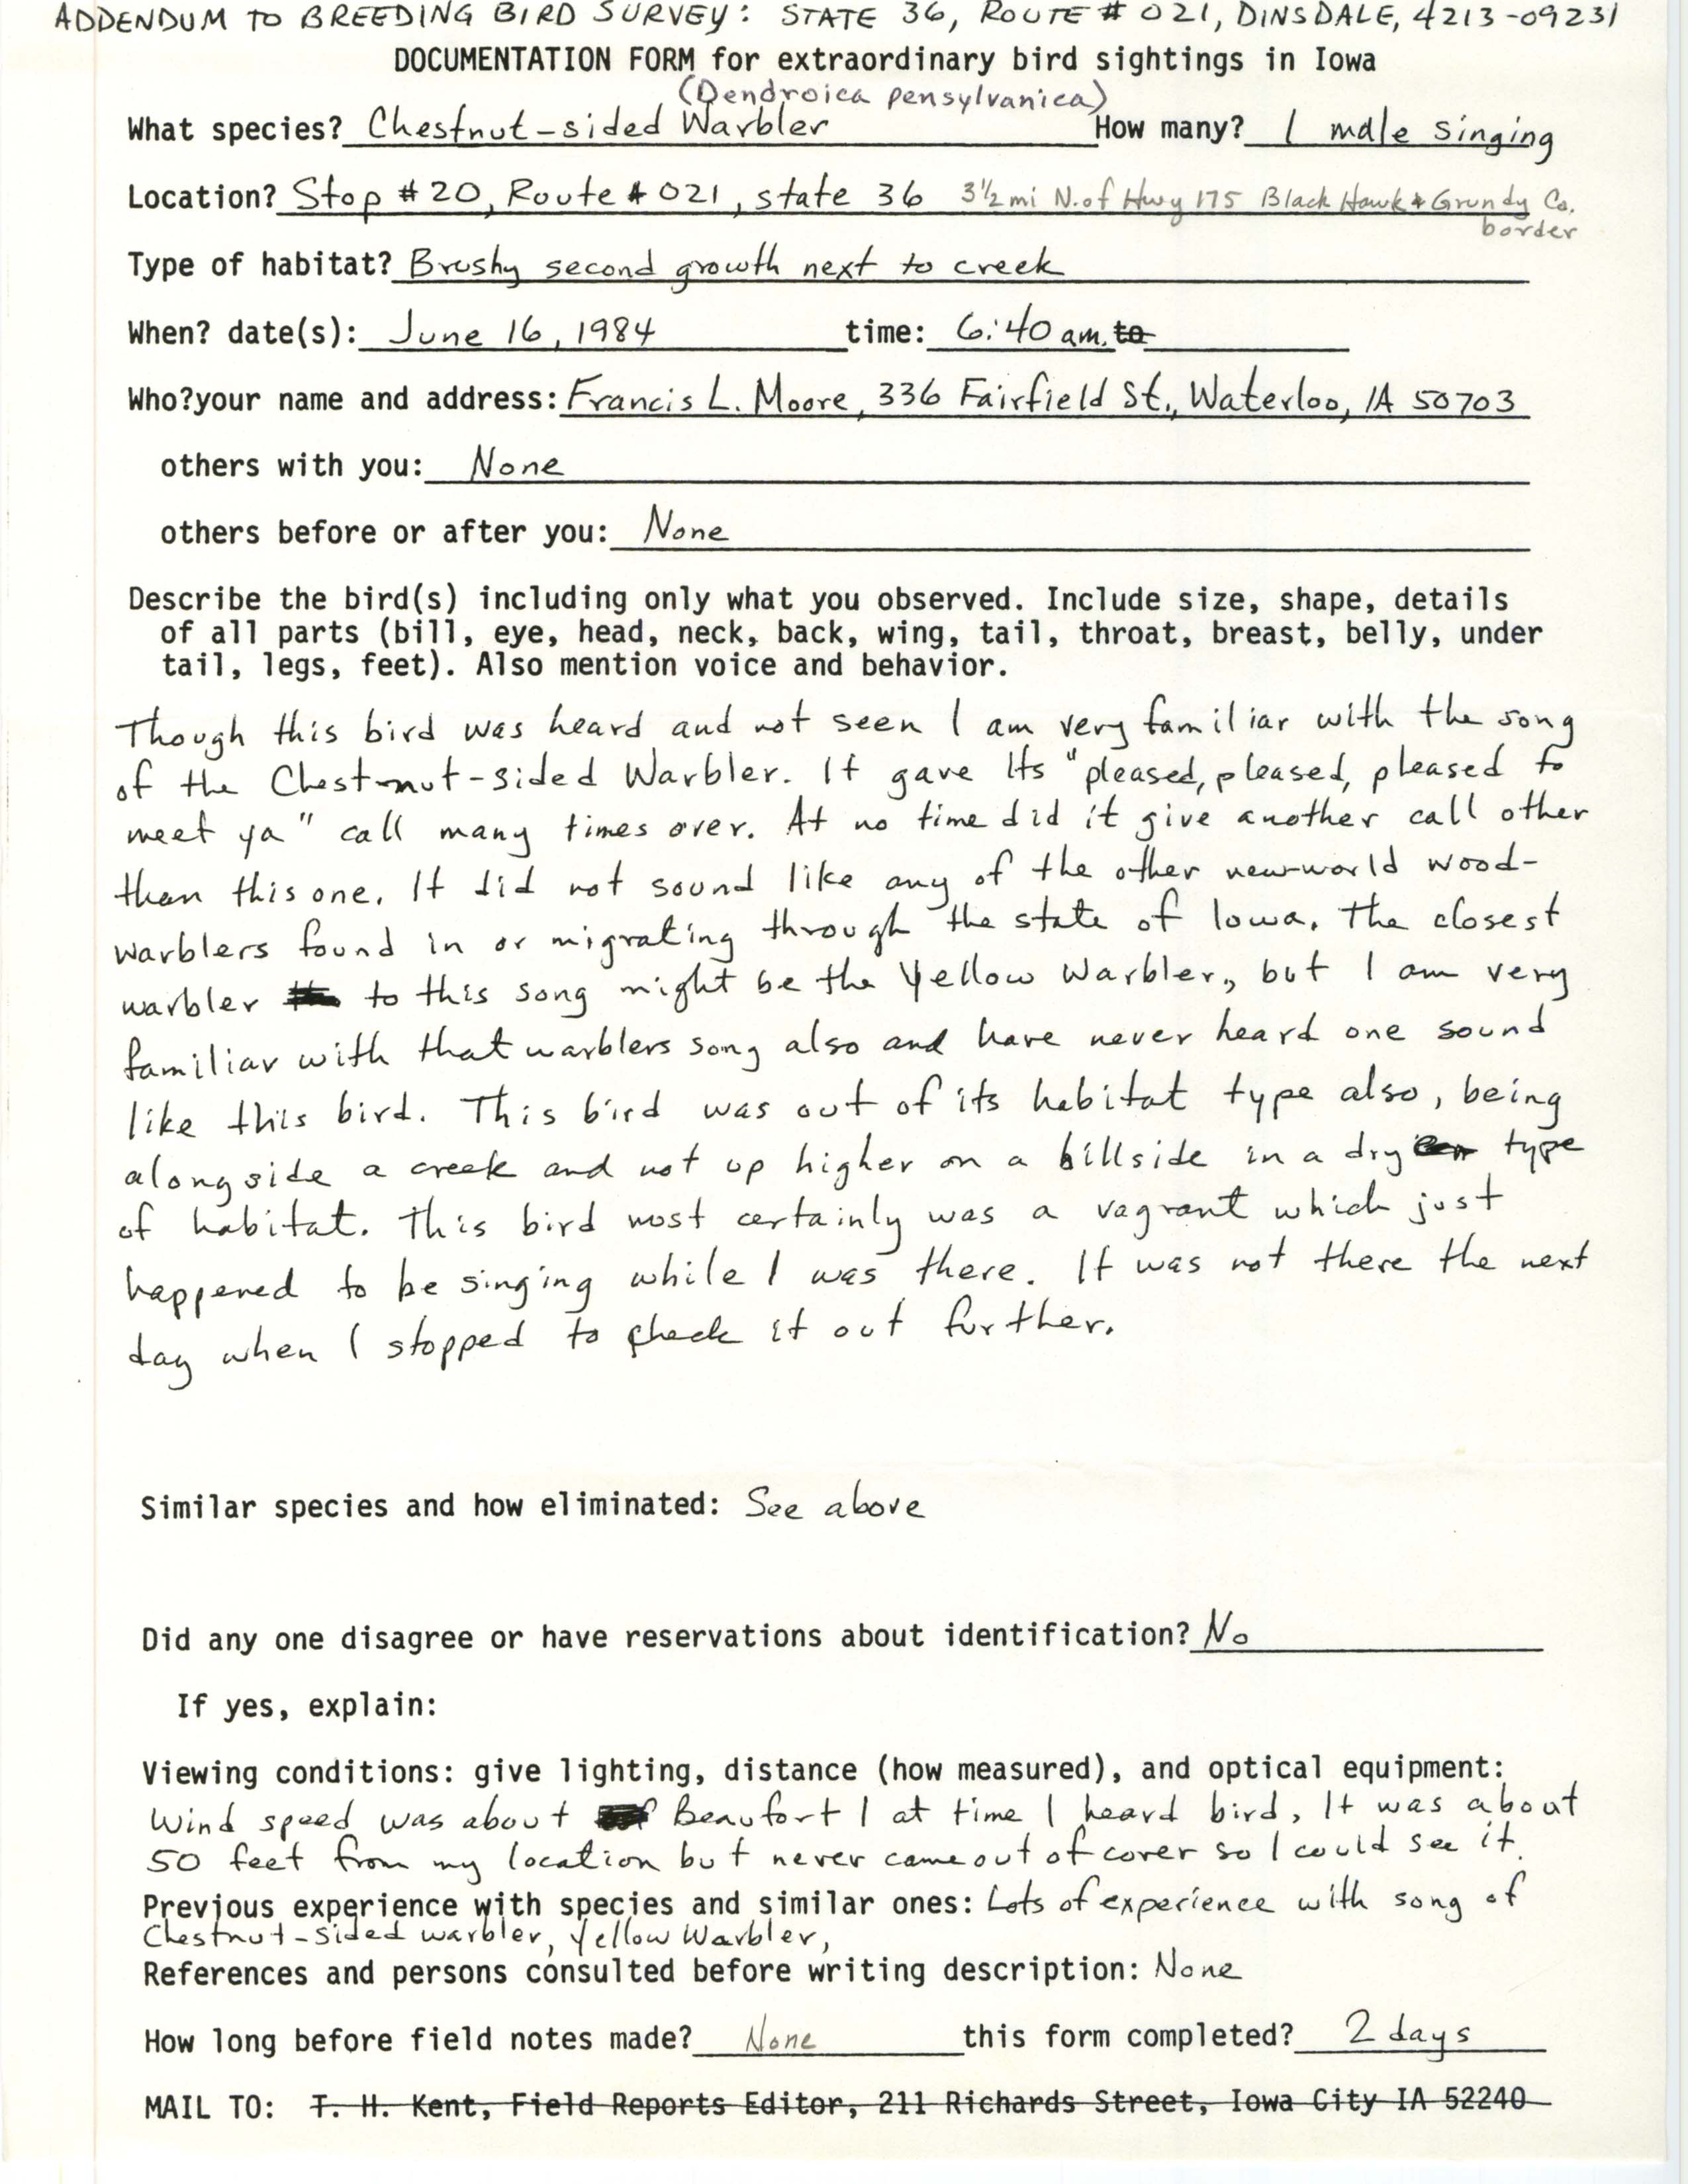 Rare bird documentation form for Chestnut-sided Warbler near Zaneta in 1984